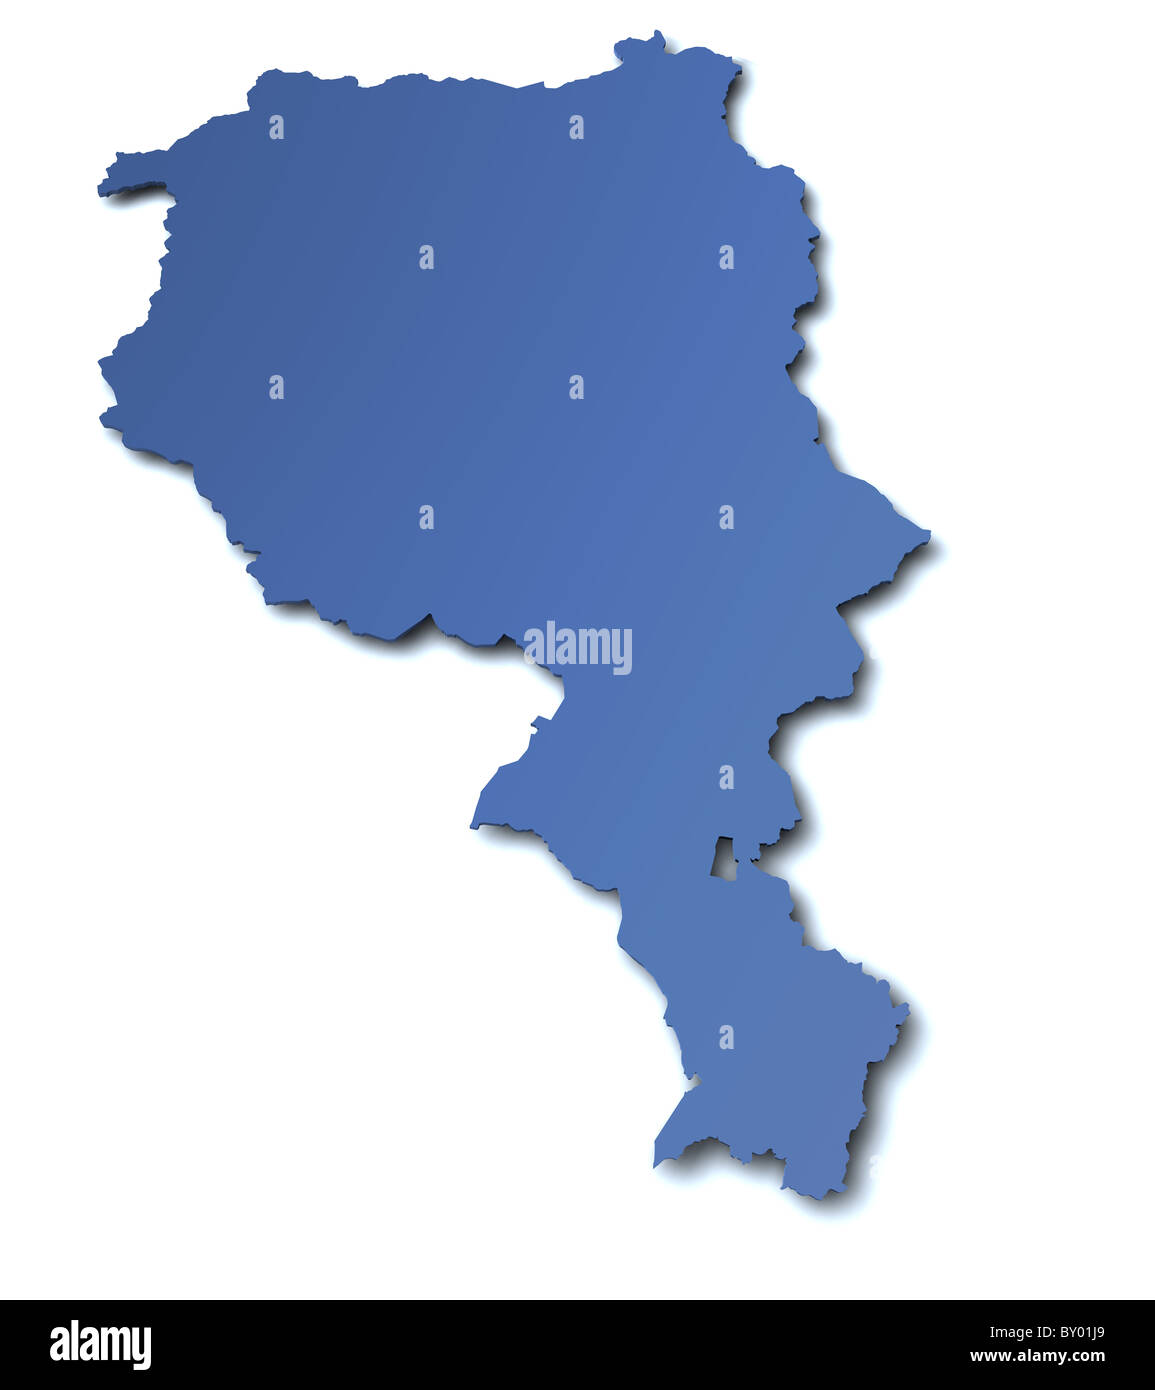 Map of canton Ticino - Switzerland Stock Photo